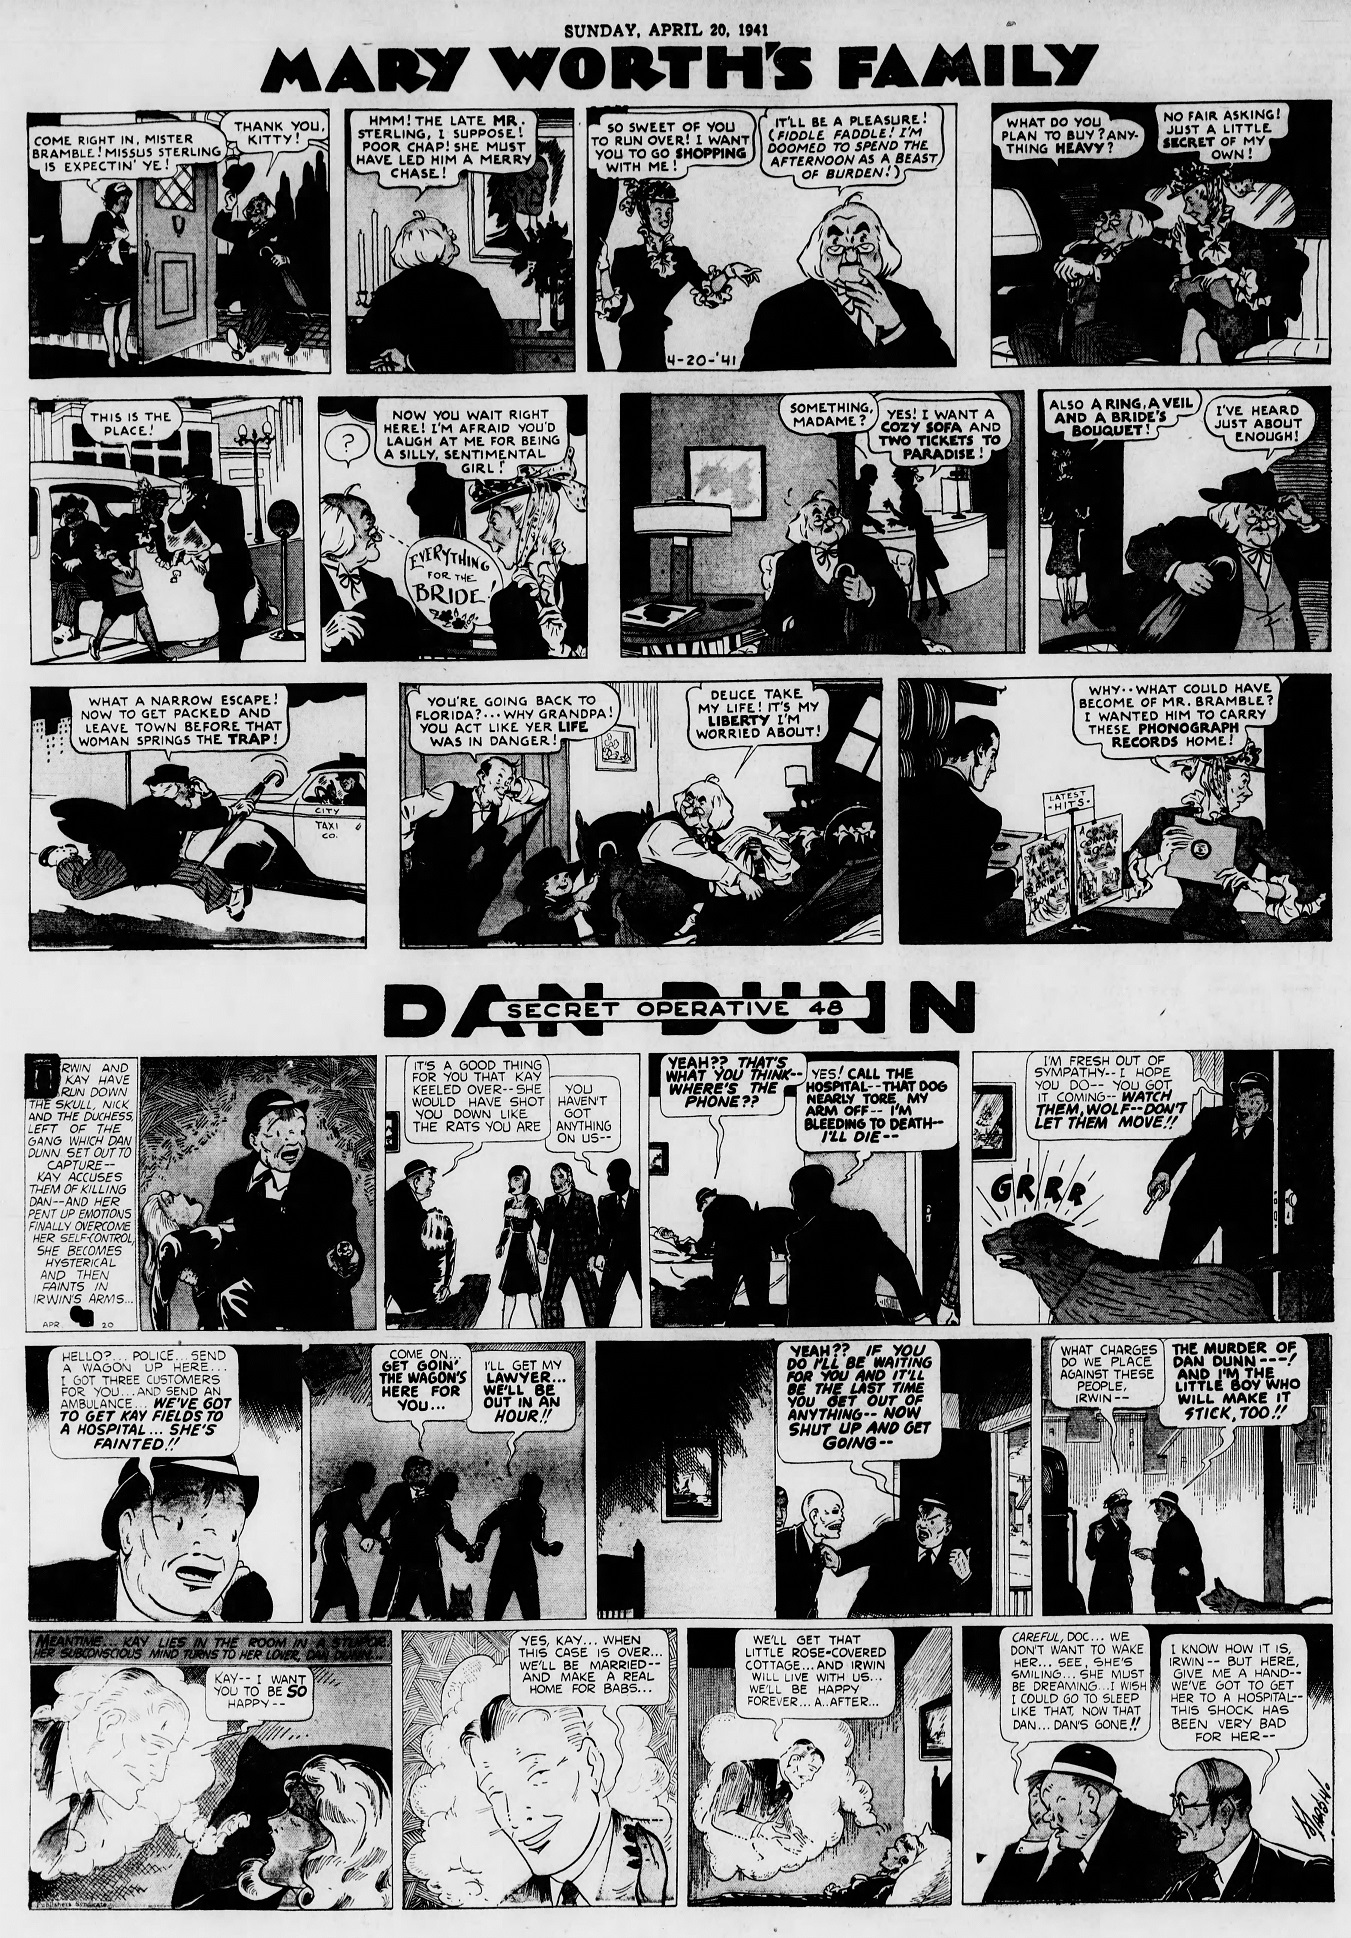 The_Brooklyn_Daily_Eagle_Sun__Apr_20__1941_(7).jpg